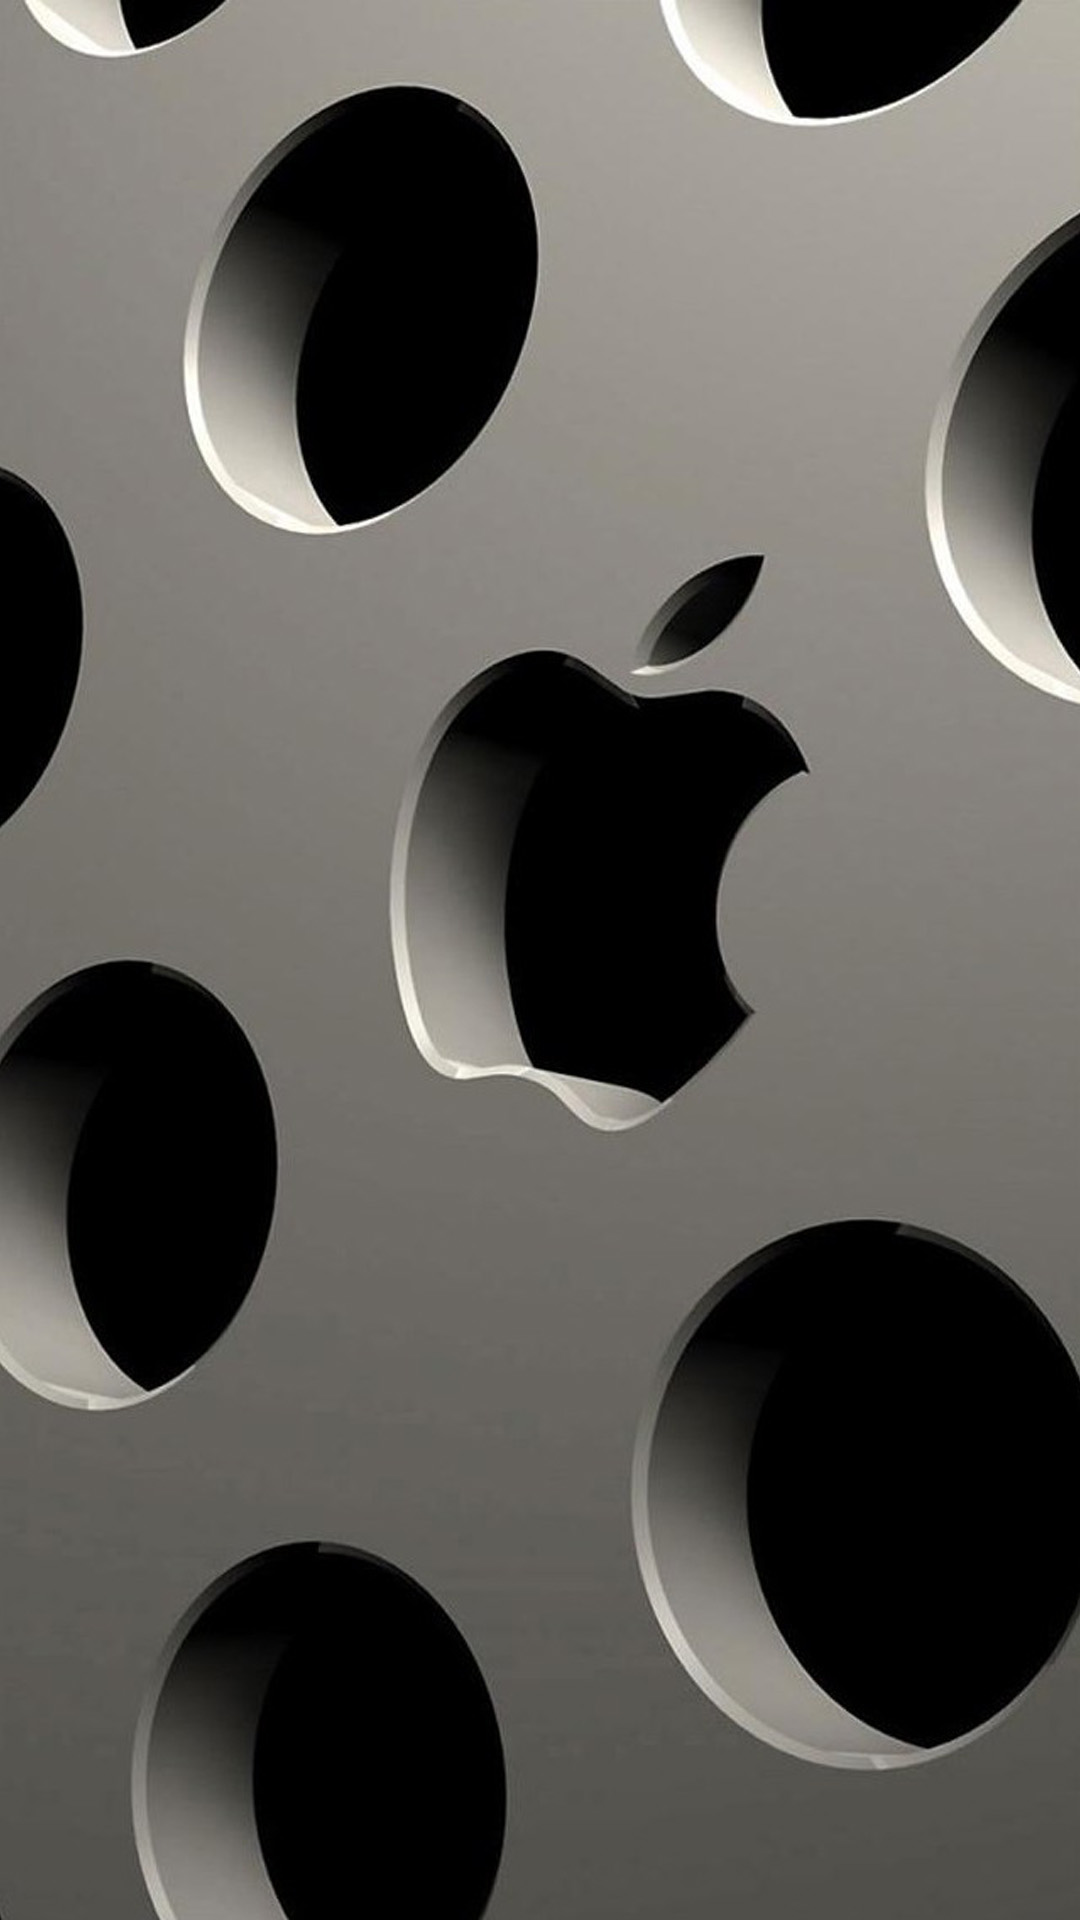 Appleロゴの3dアート Iphone6壁紙 Iphone Wallpapers